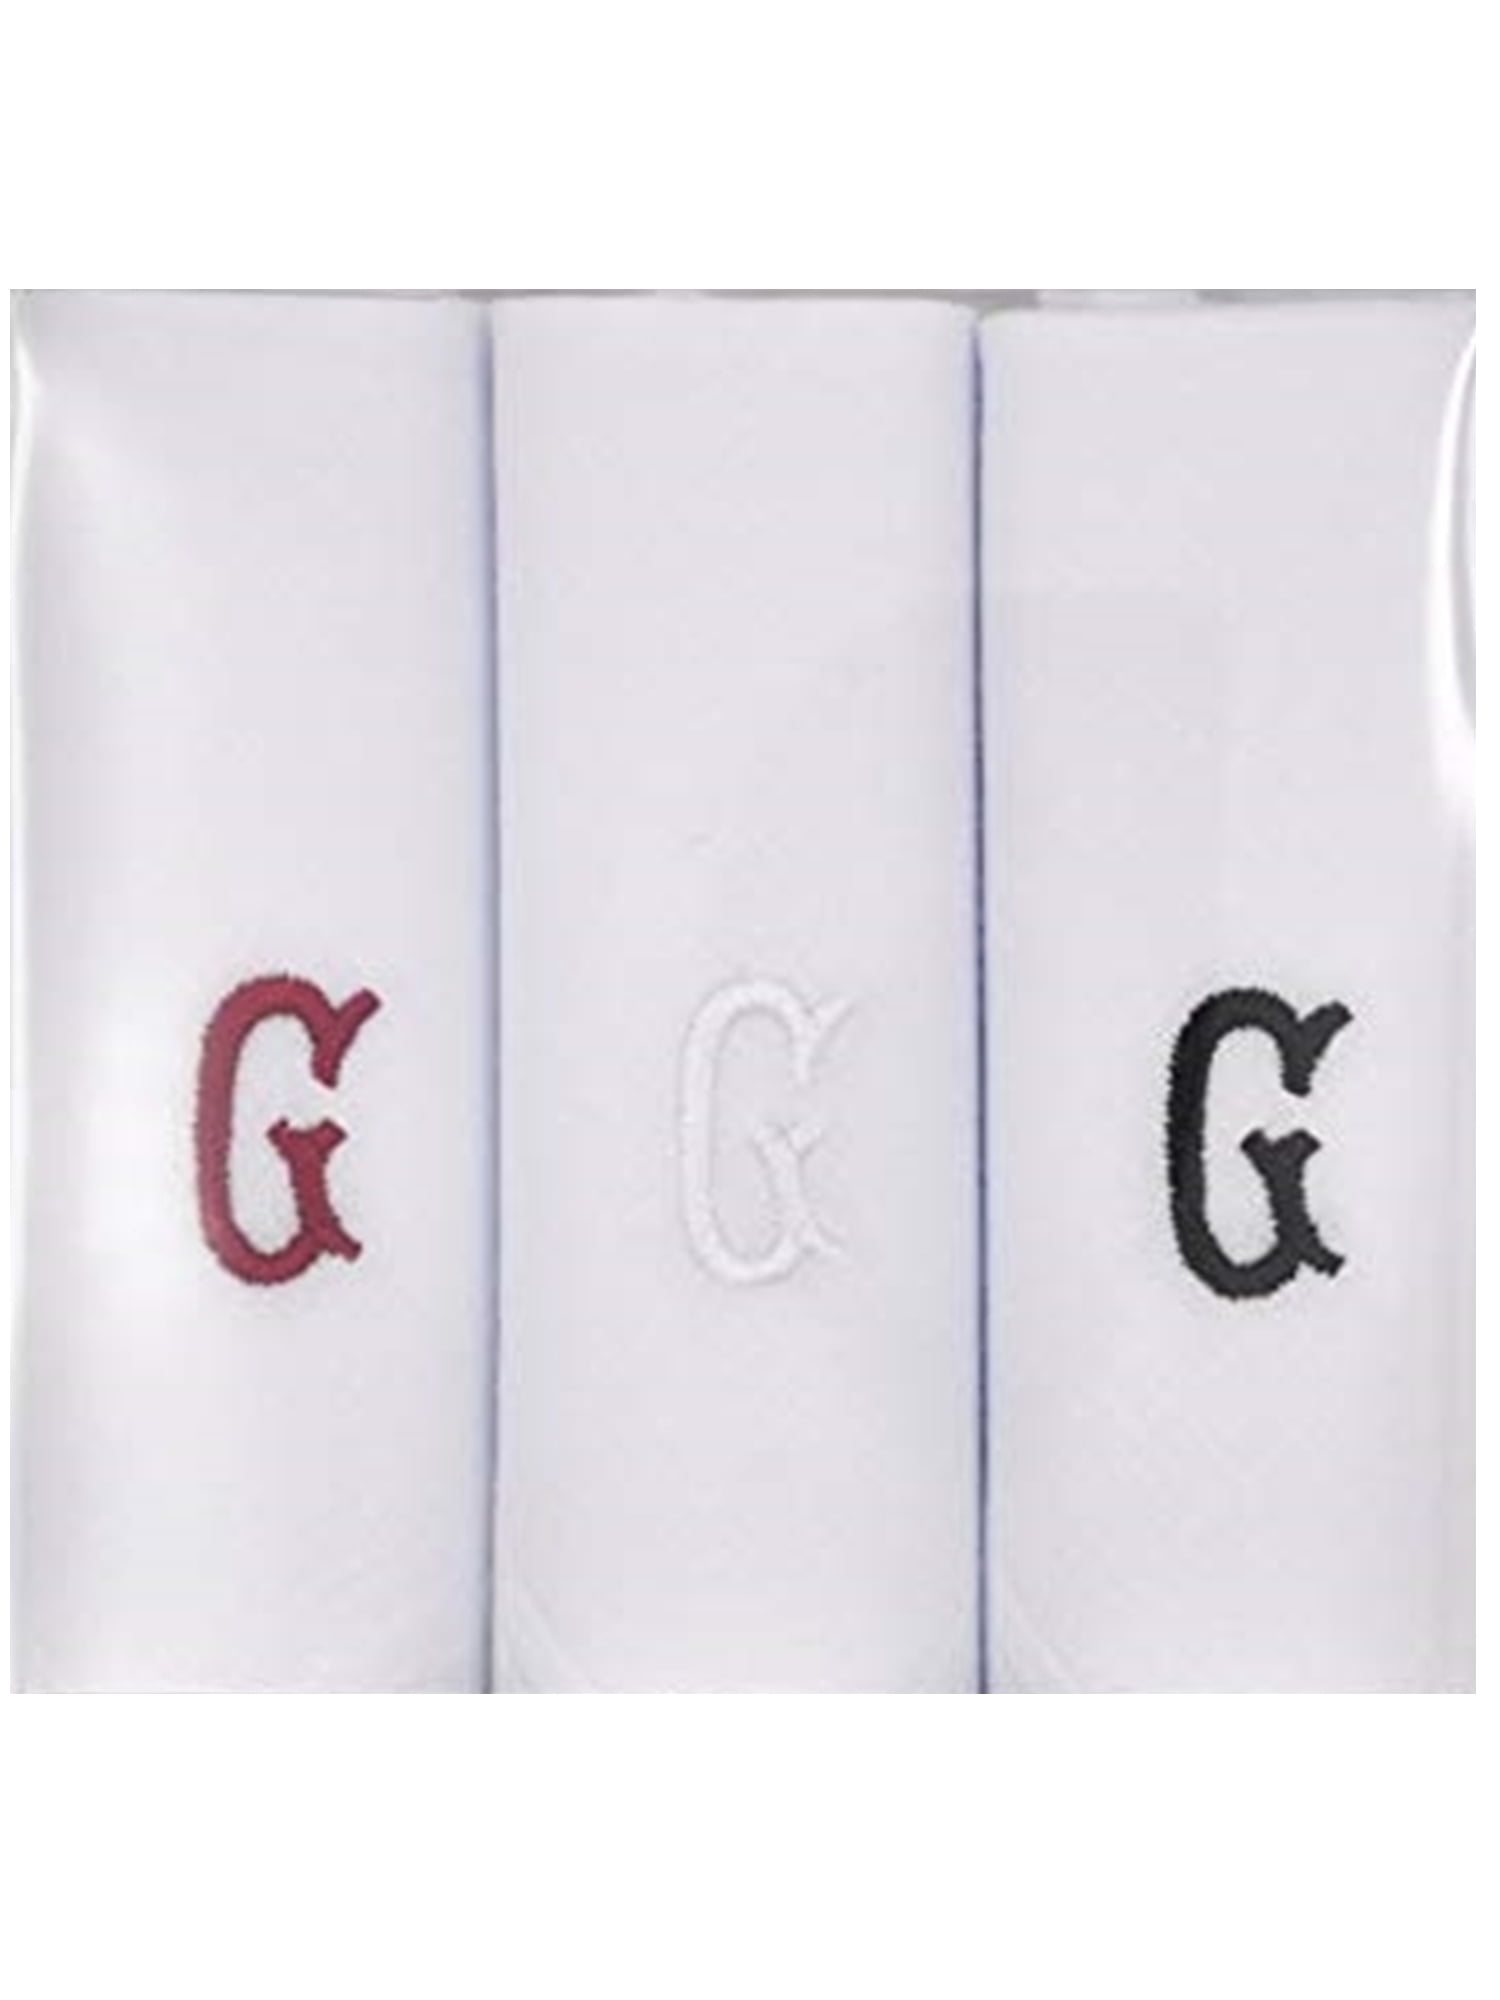 Hankie Pocket Square Handkerchief  SILVER RED FLORAL Premium Cotton  UK Made 